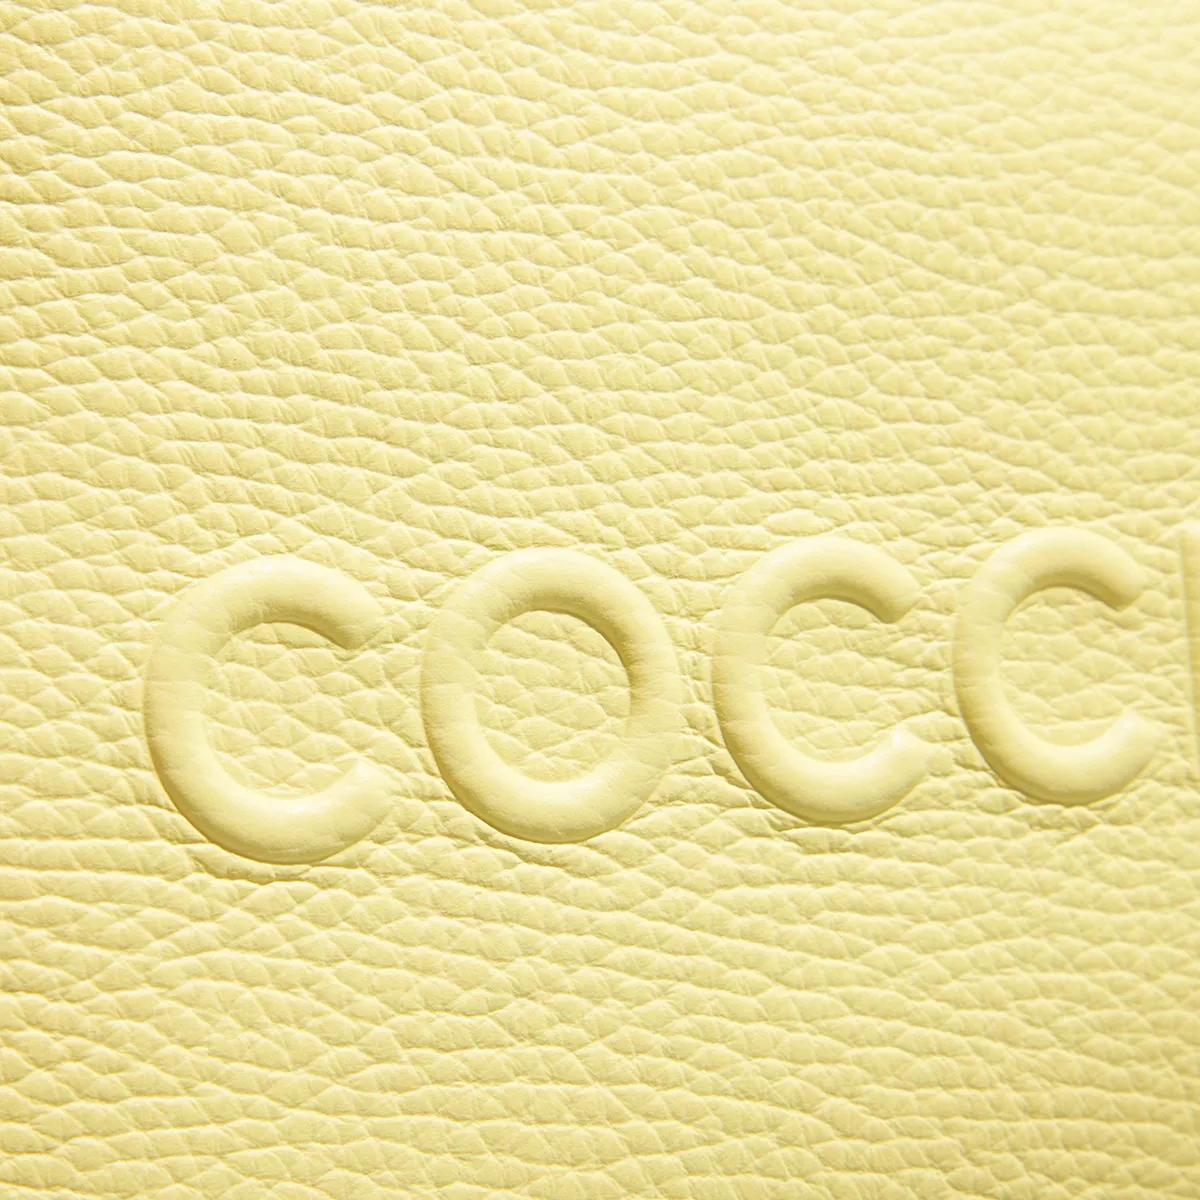 Coccinelle Totes m Myrtha Maxi Log Handbag in geel